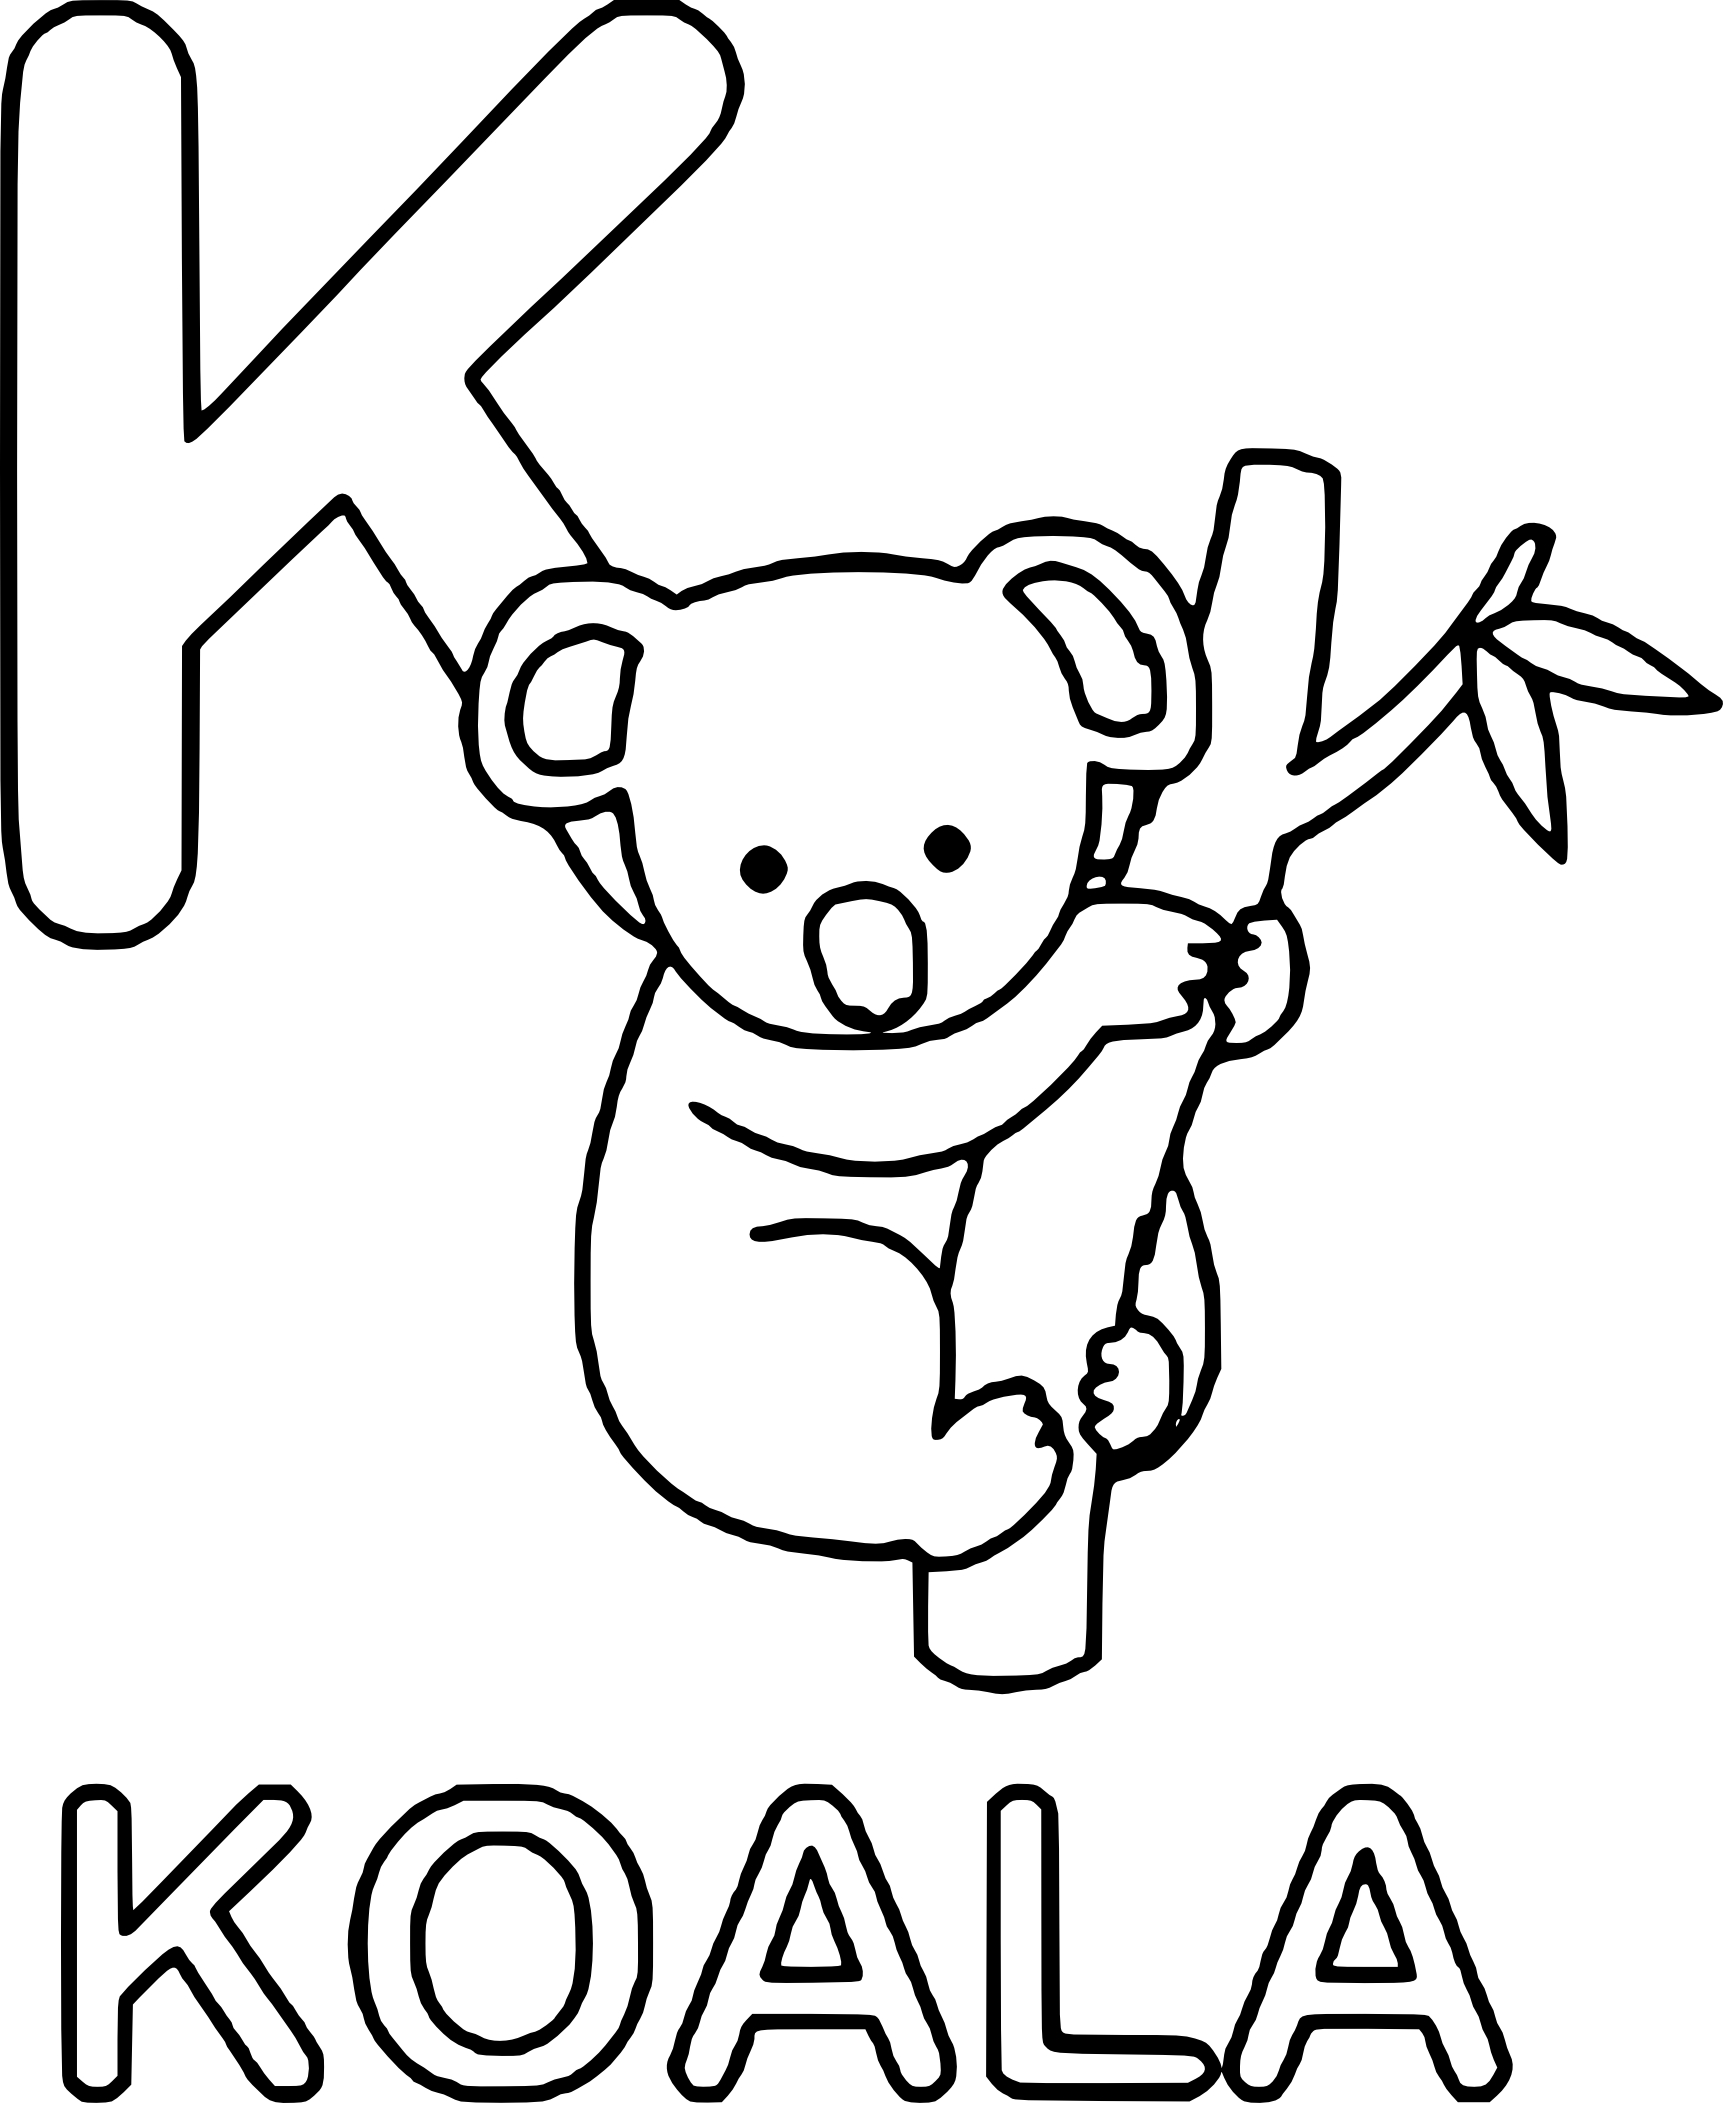 Coloriage Koala alphabet